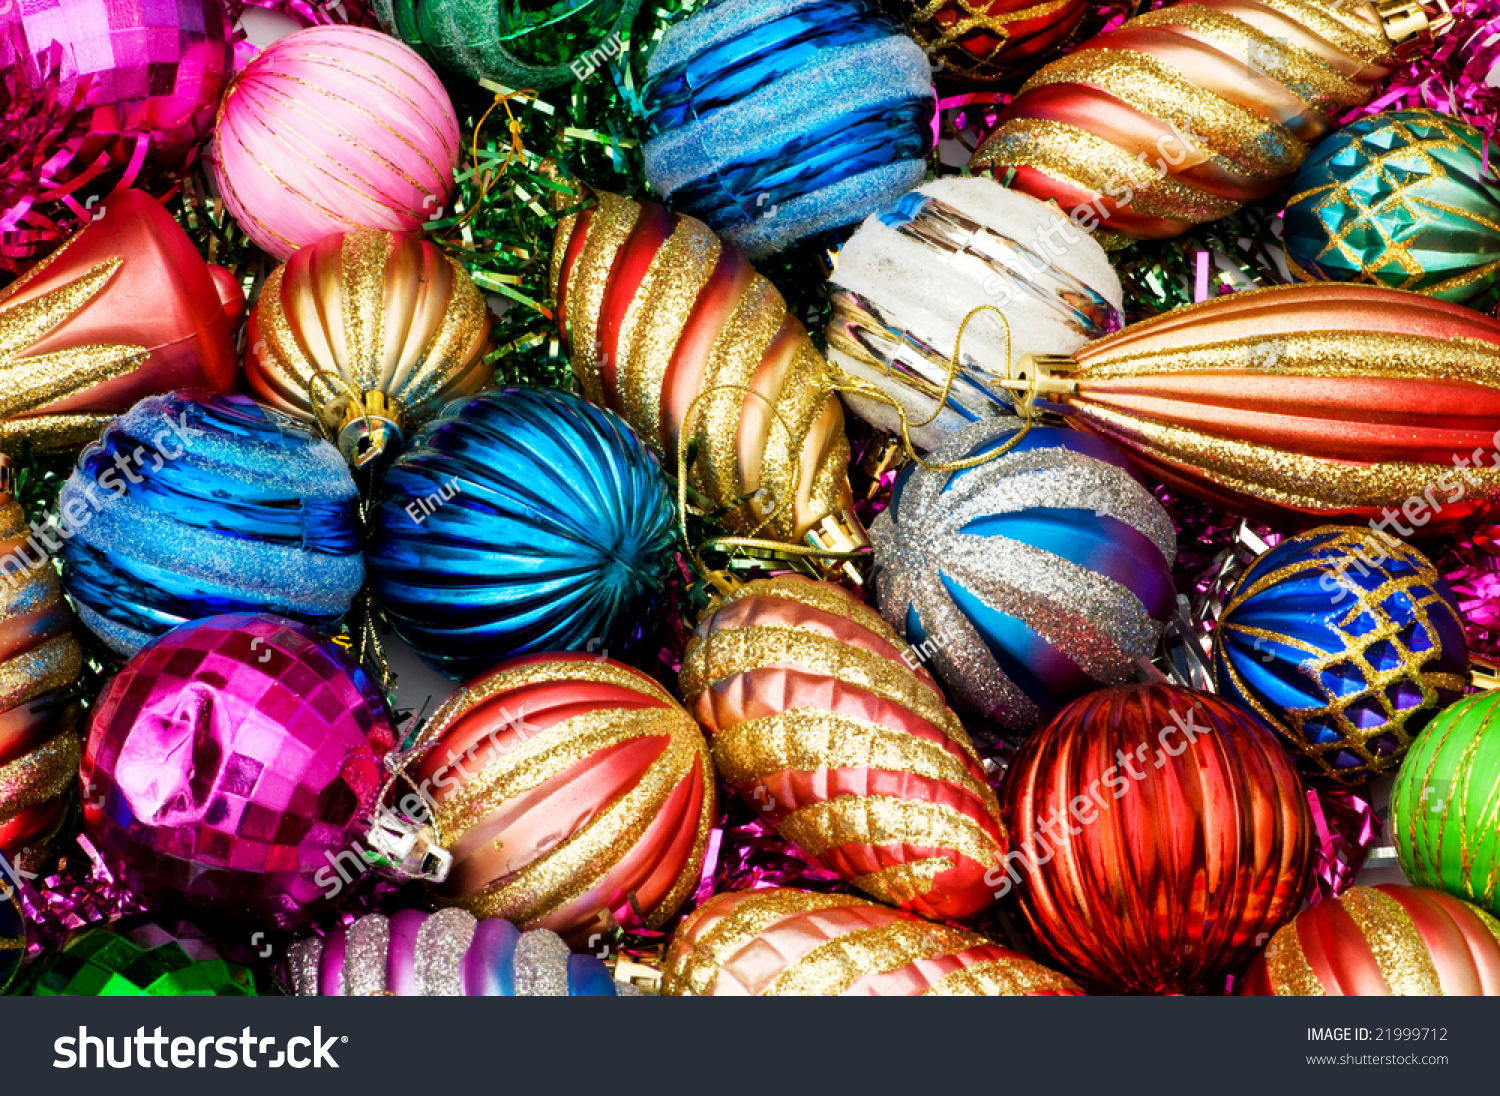 Colorful Christmas Decoration On A Shiny Background Stock Photo ...